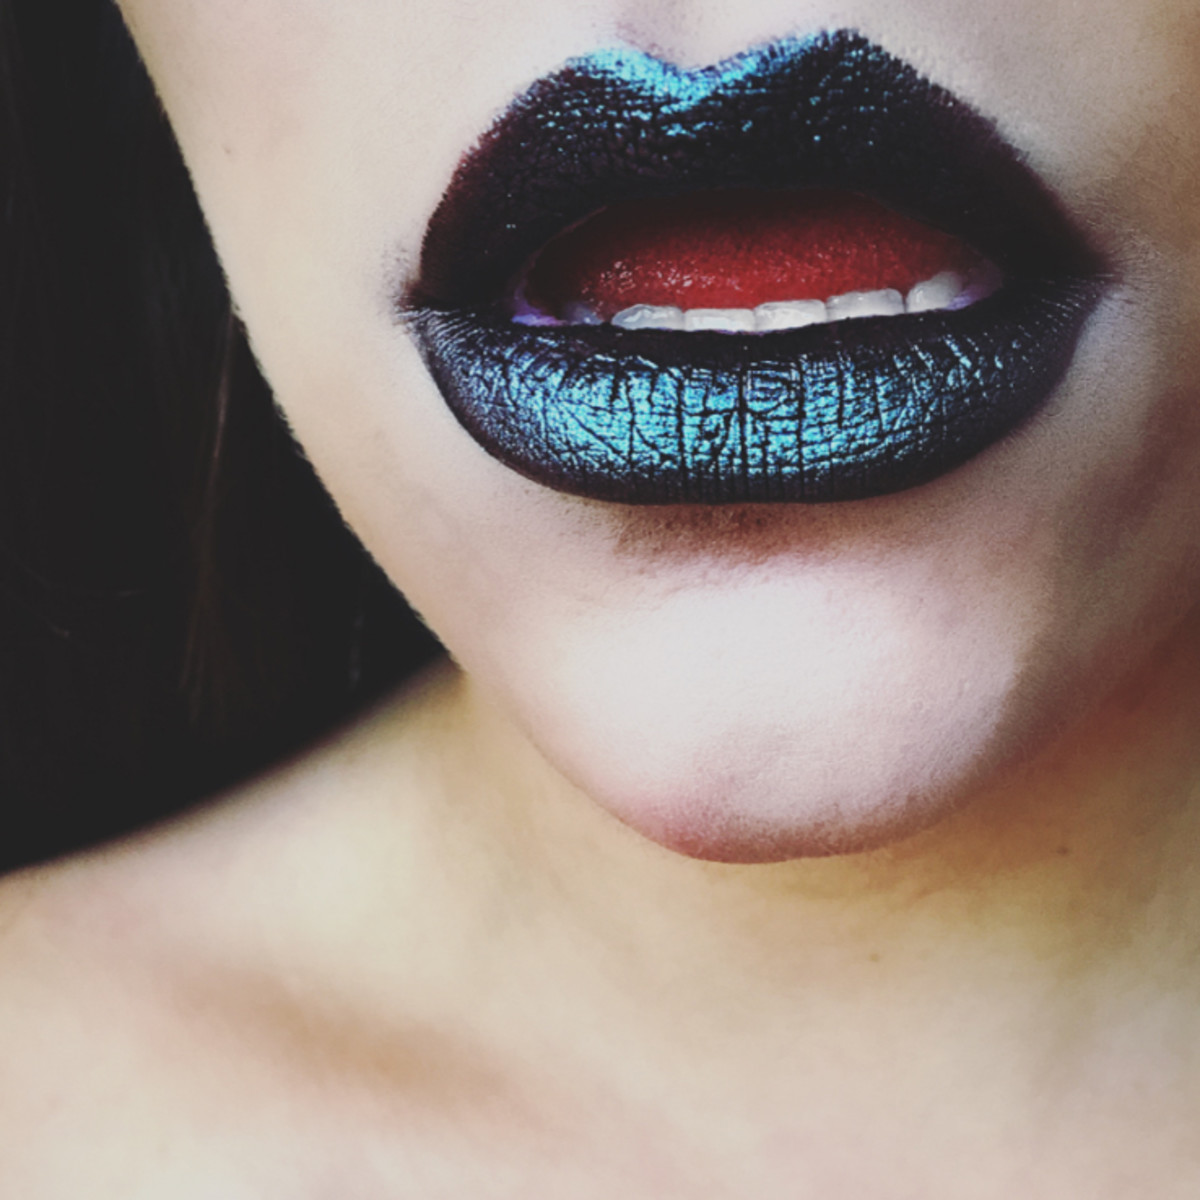 Metallic blue lips